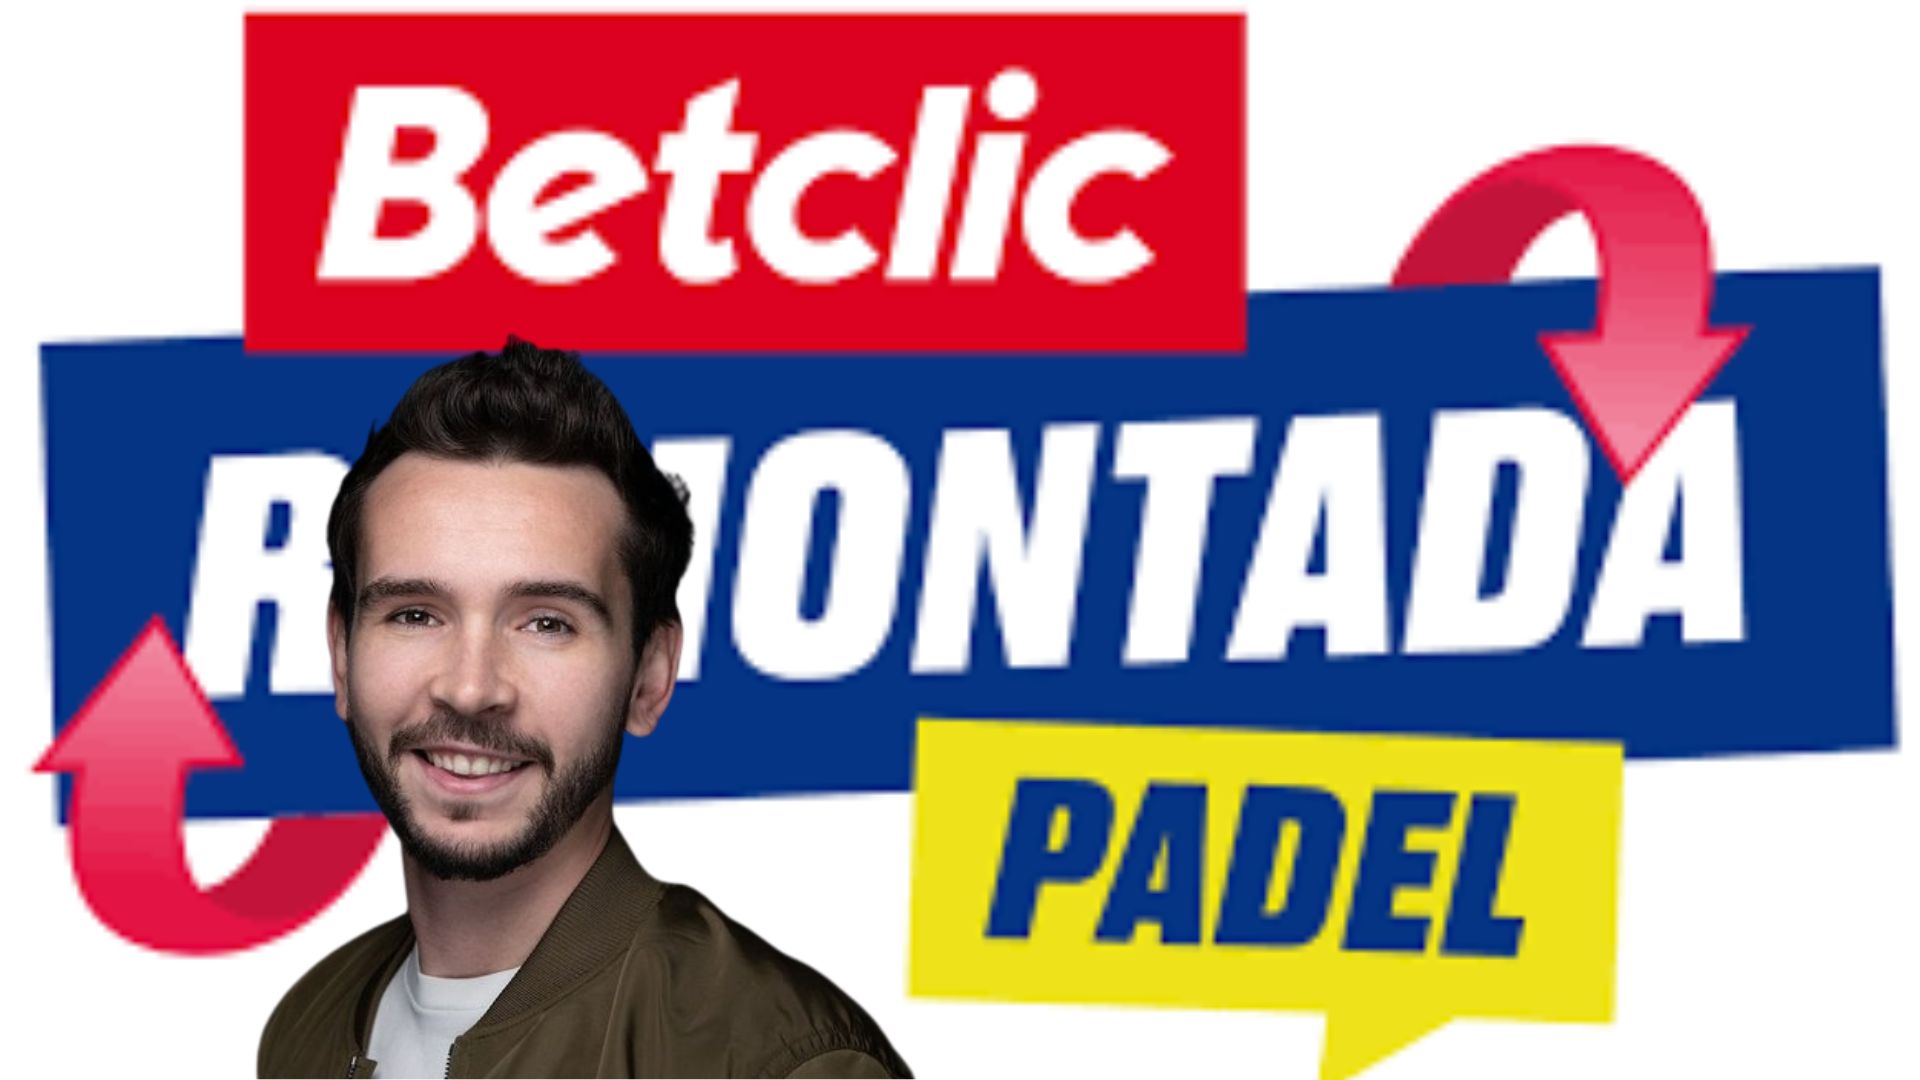 Betclic-emontada Padel Zondag